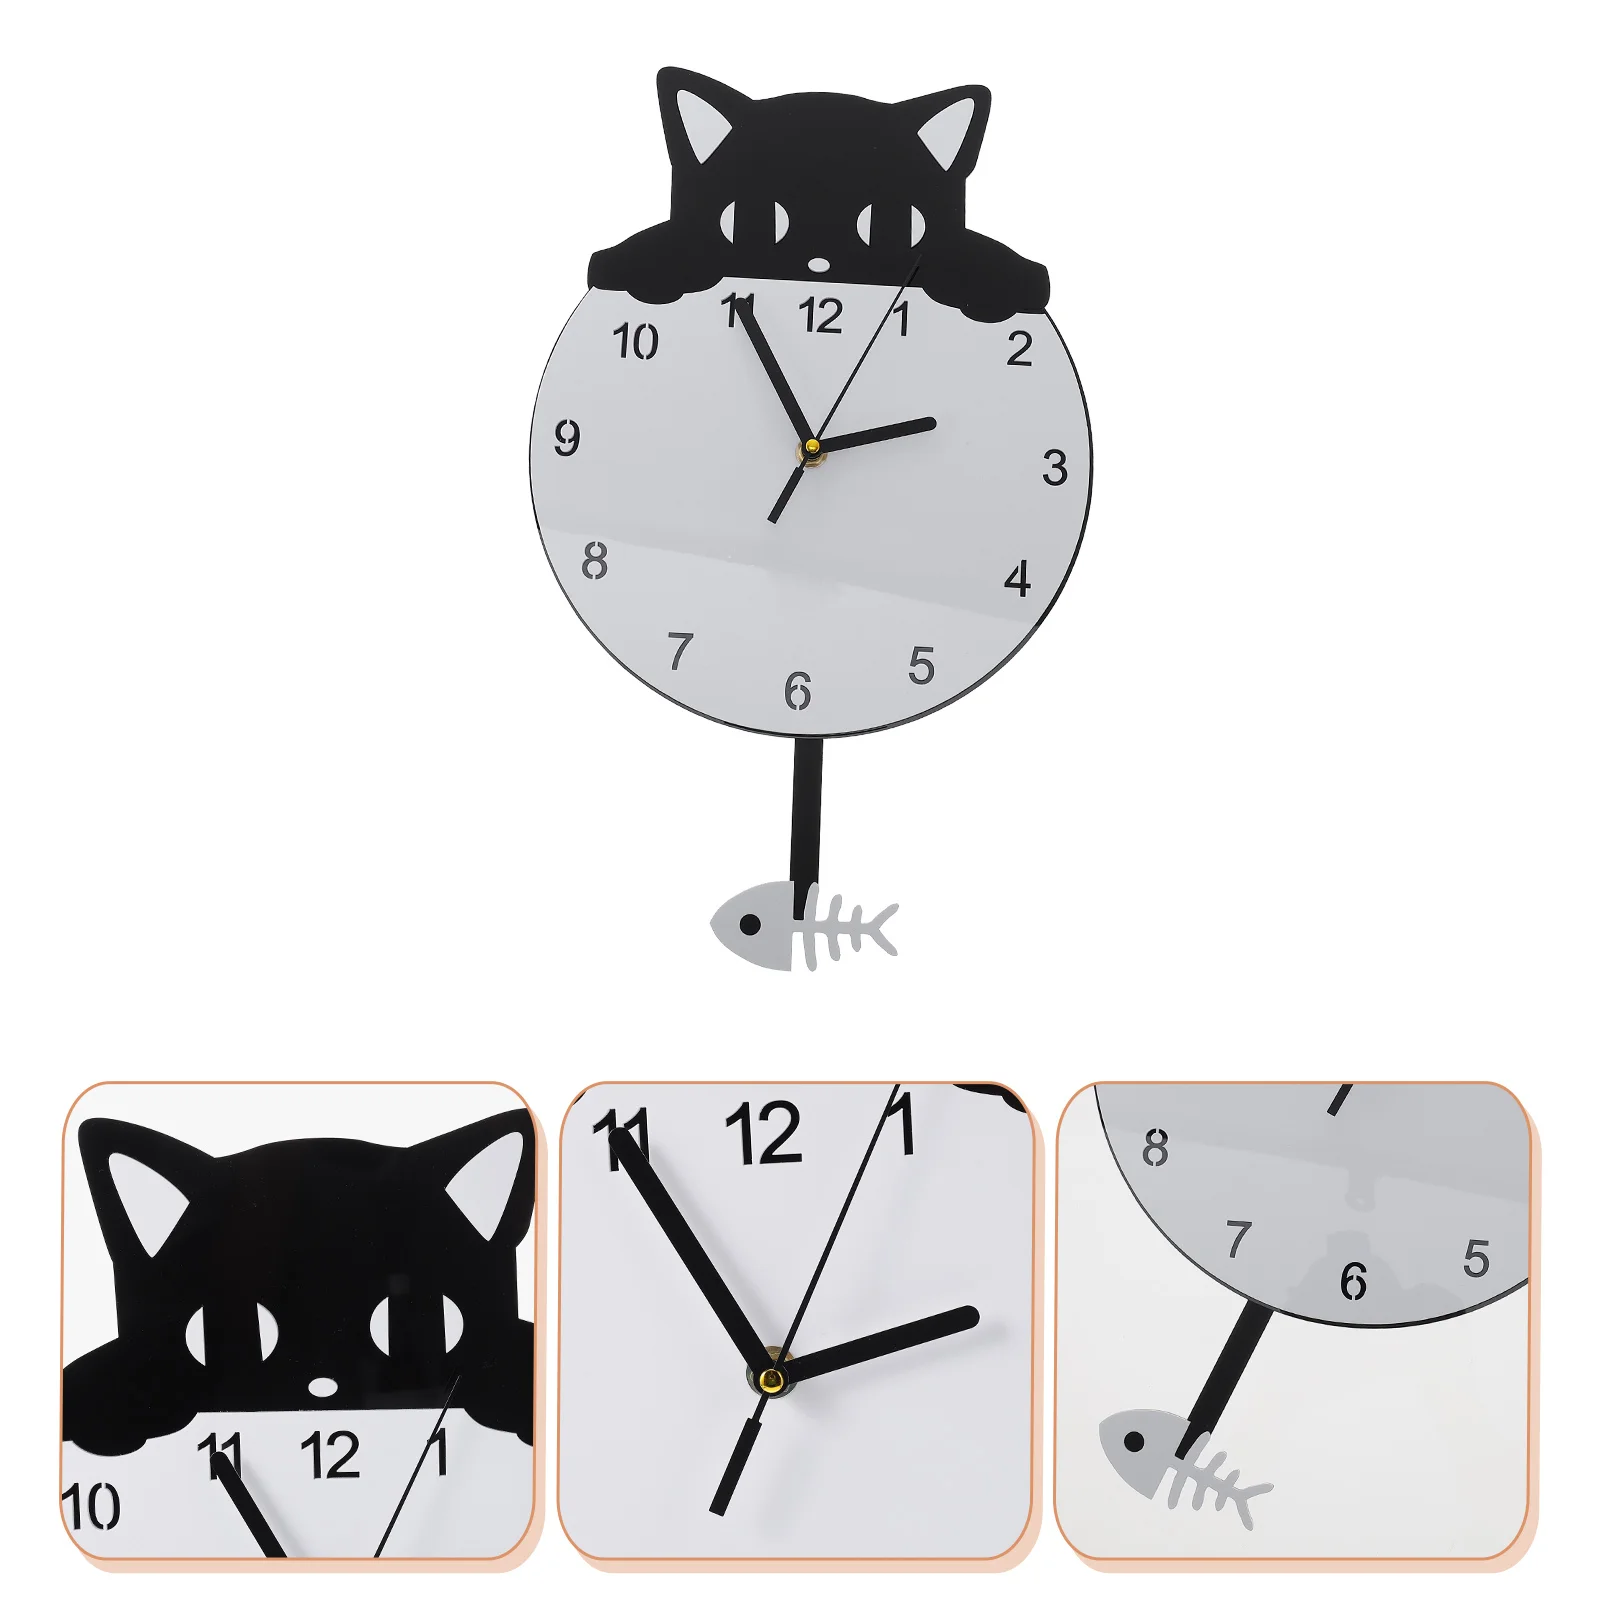 

3d Wall Clock Cat Clocks Bedroom Black Decor Decorative Hanging Silent Moving Eyes Tail Vintage Cute Kitchen